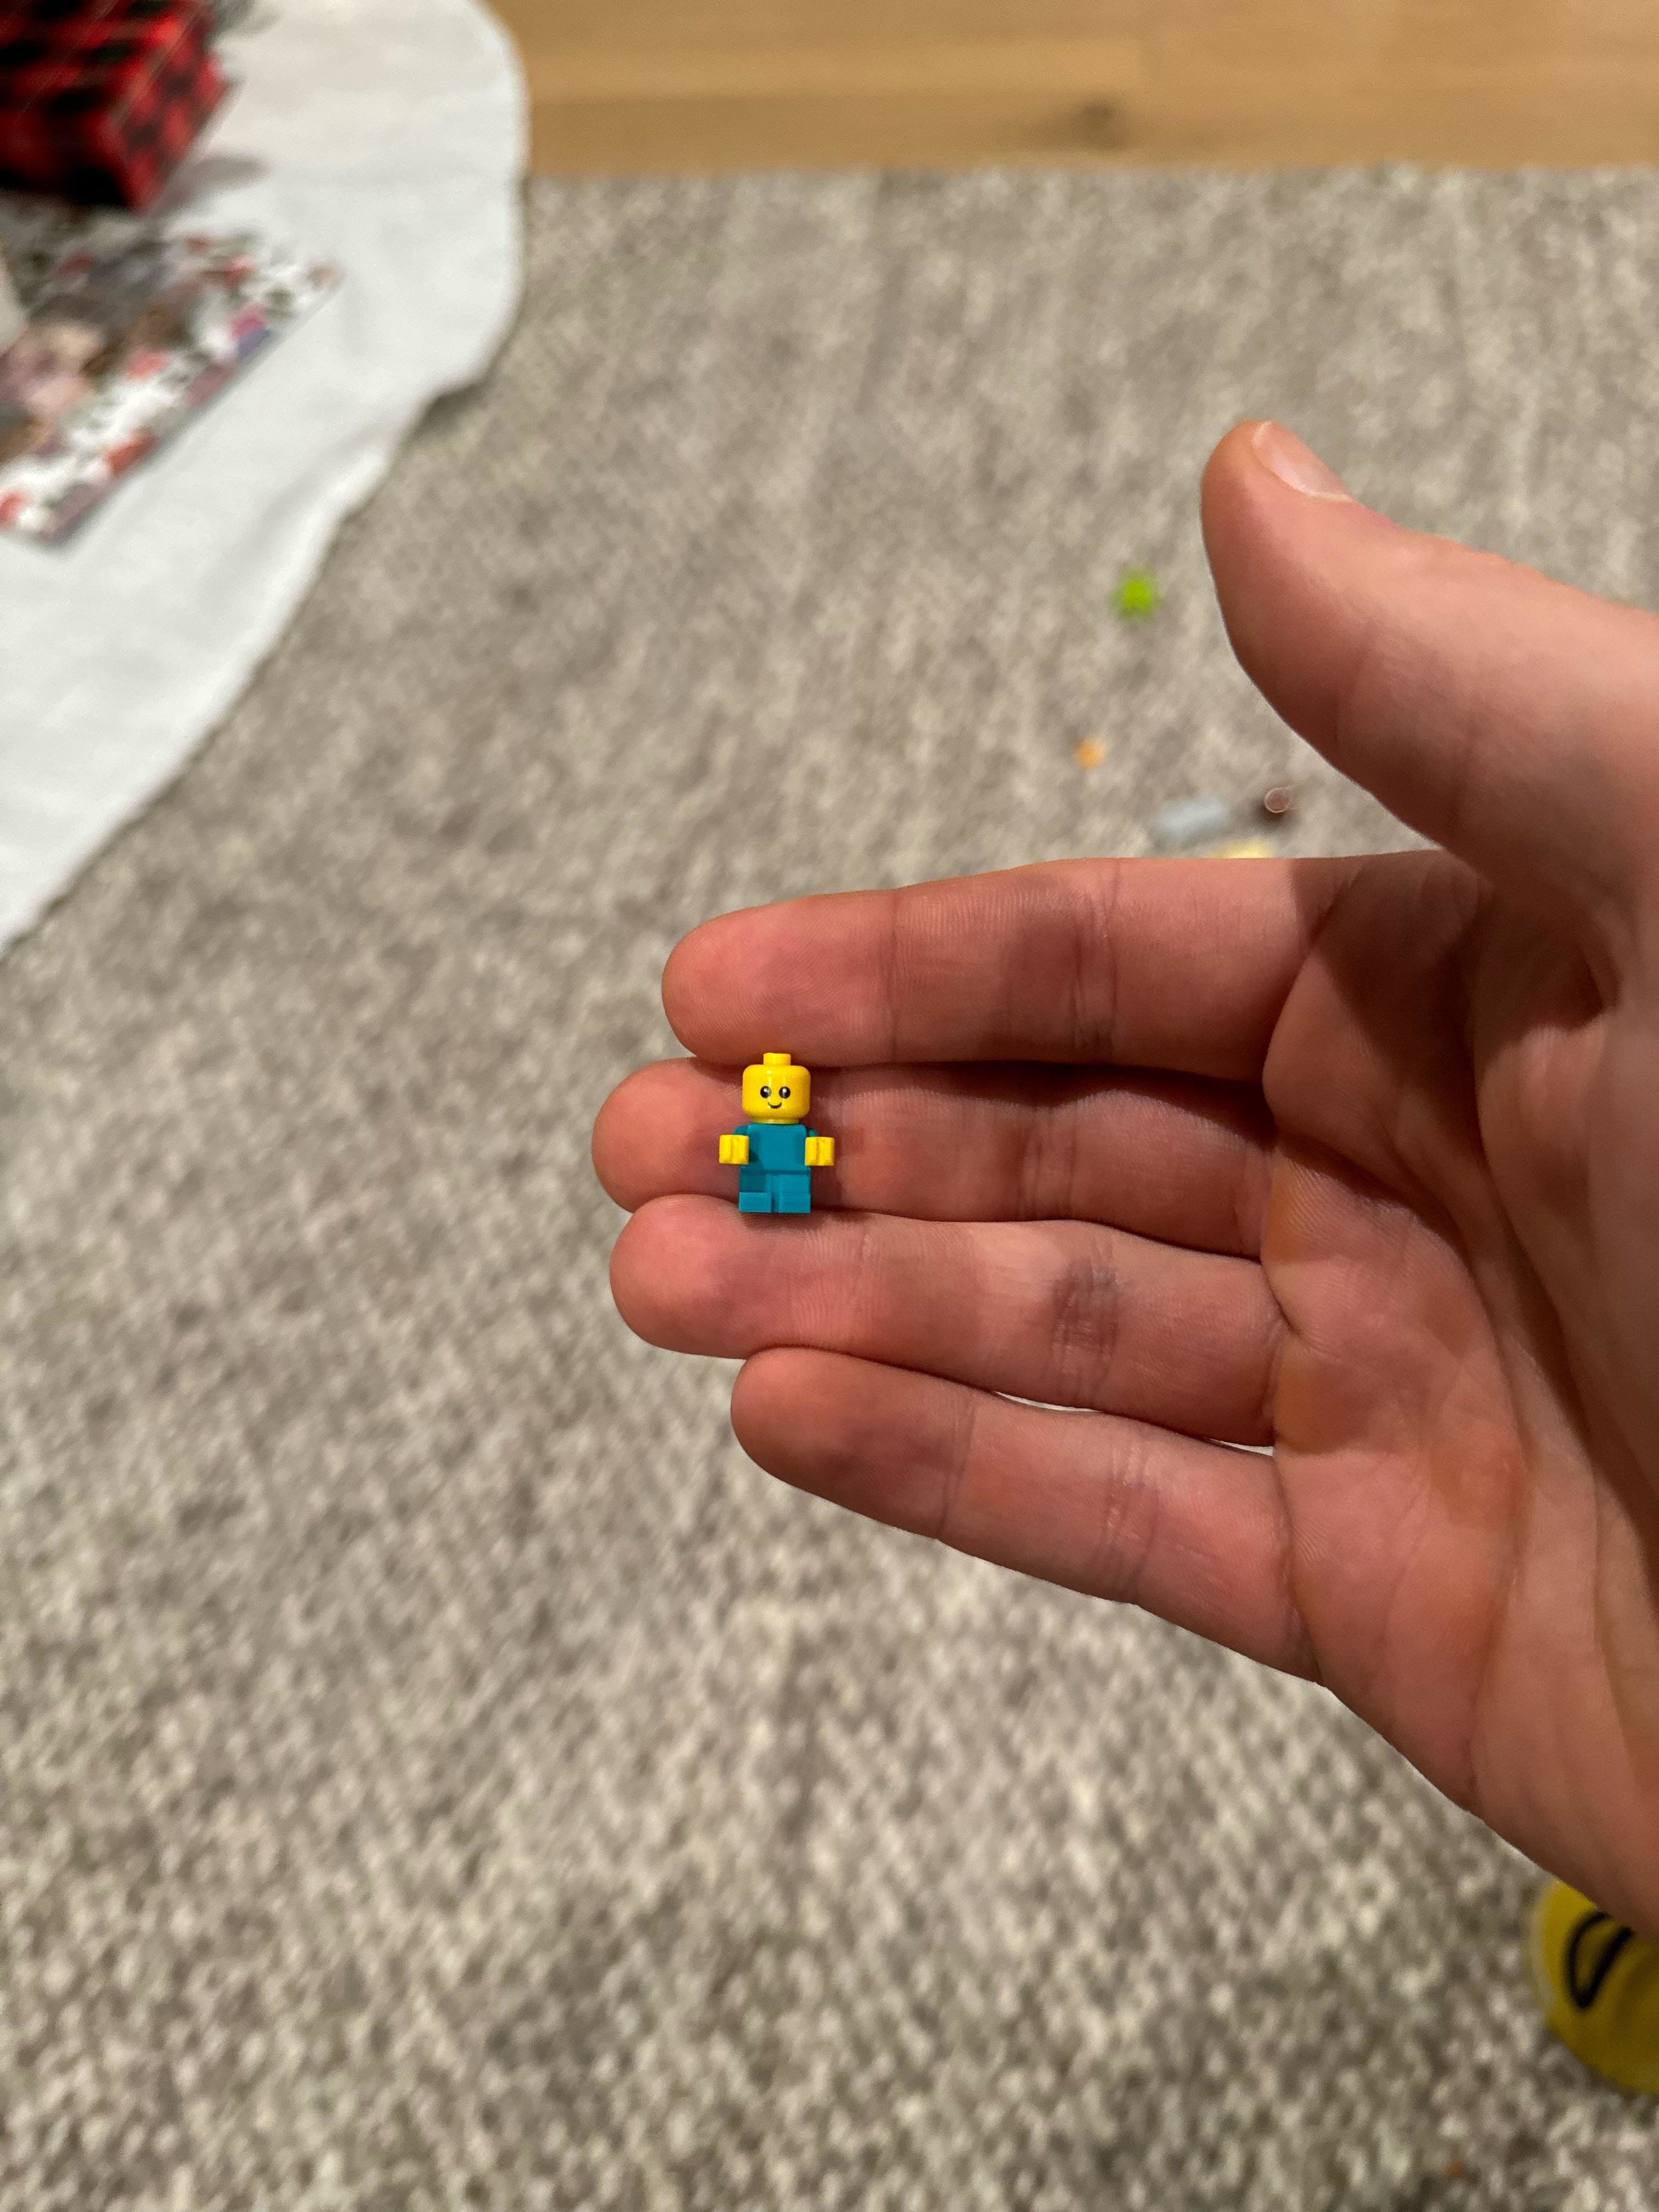 A tiny Lego figure on a finger